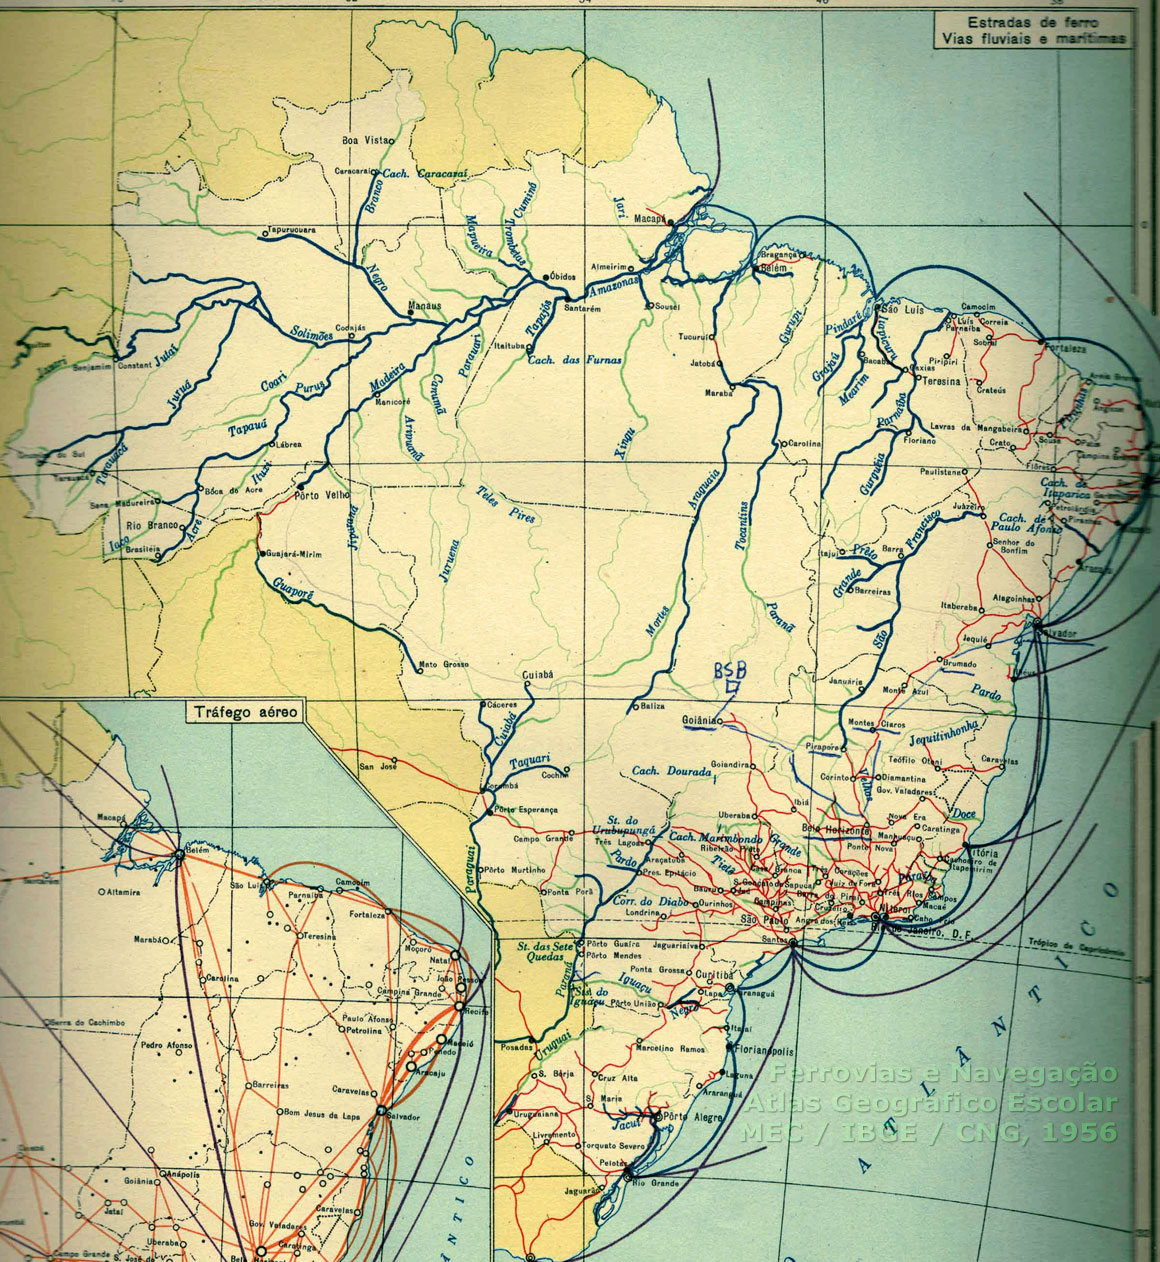 Rios navegáveis do Brasil, segundo o Atlas Escolar do MEC, de 1955